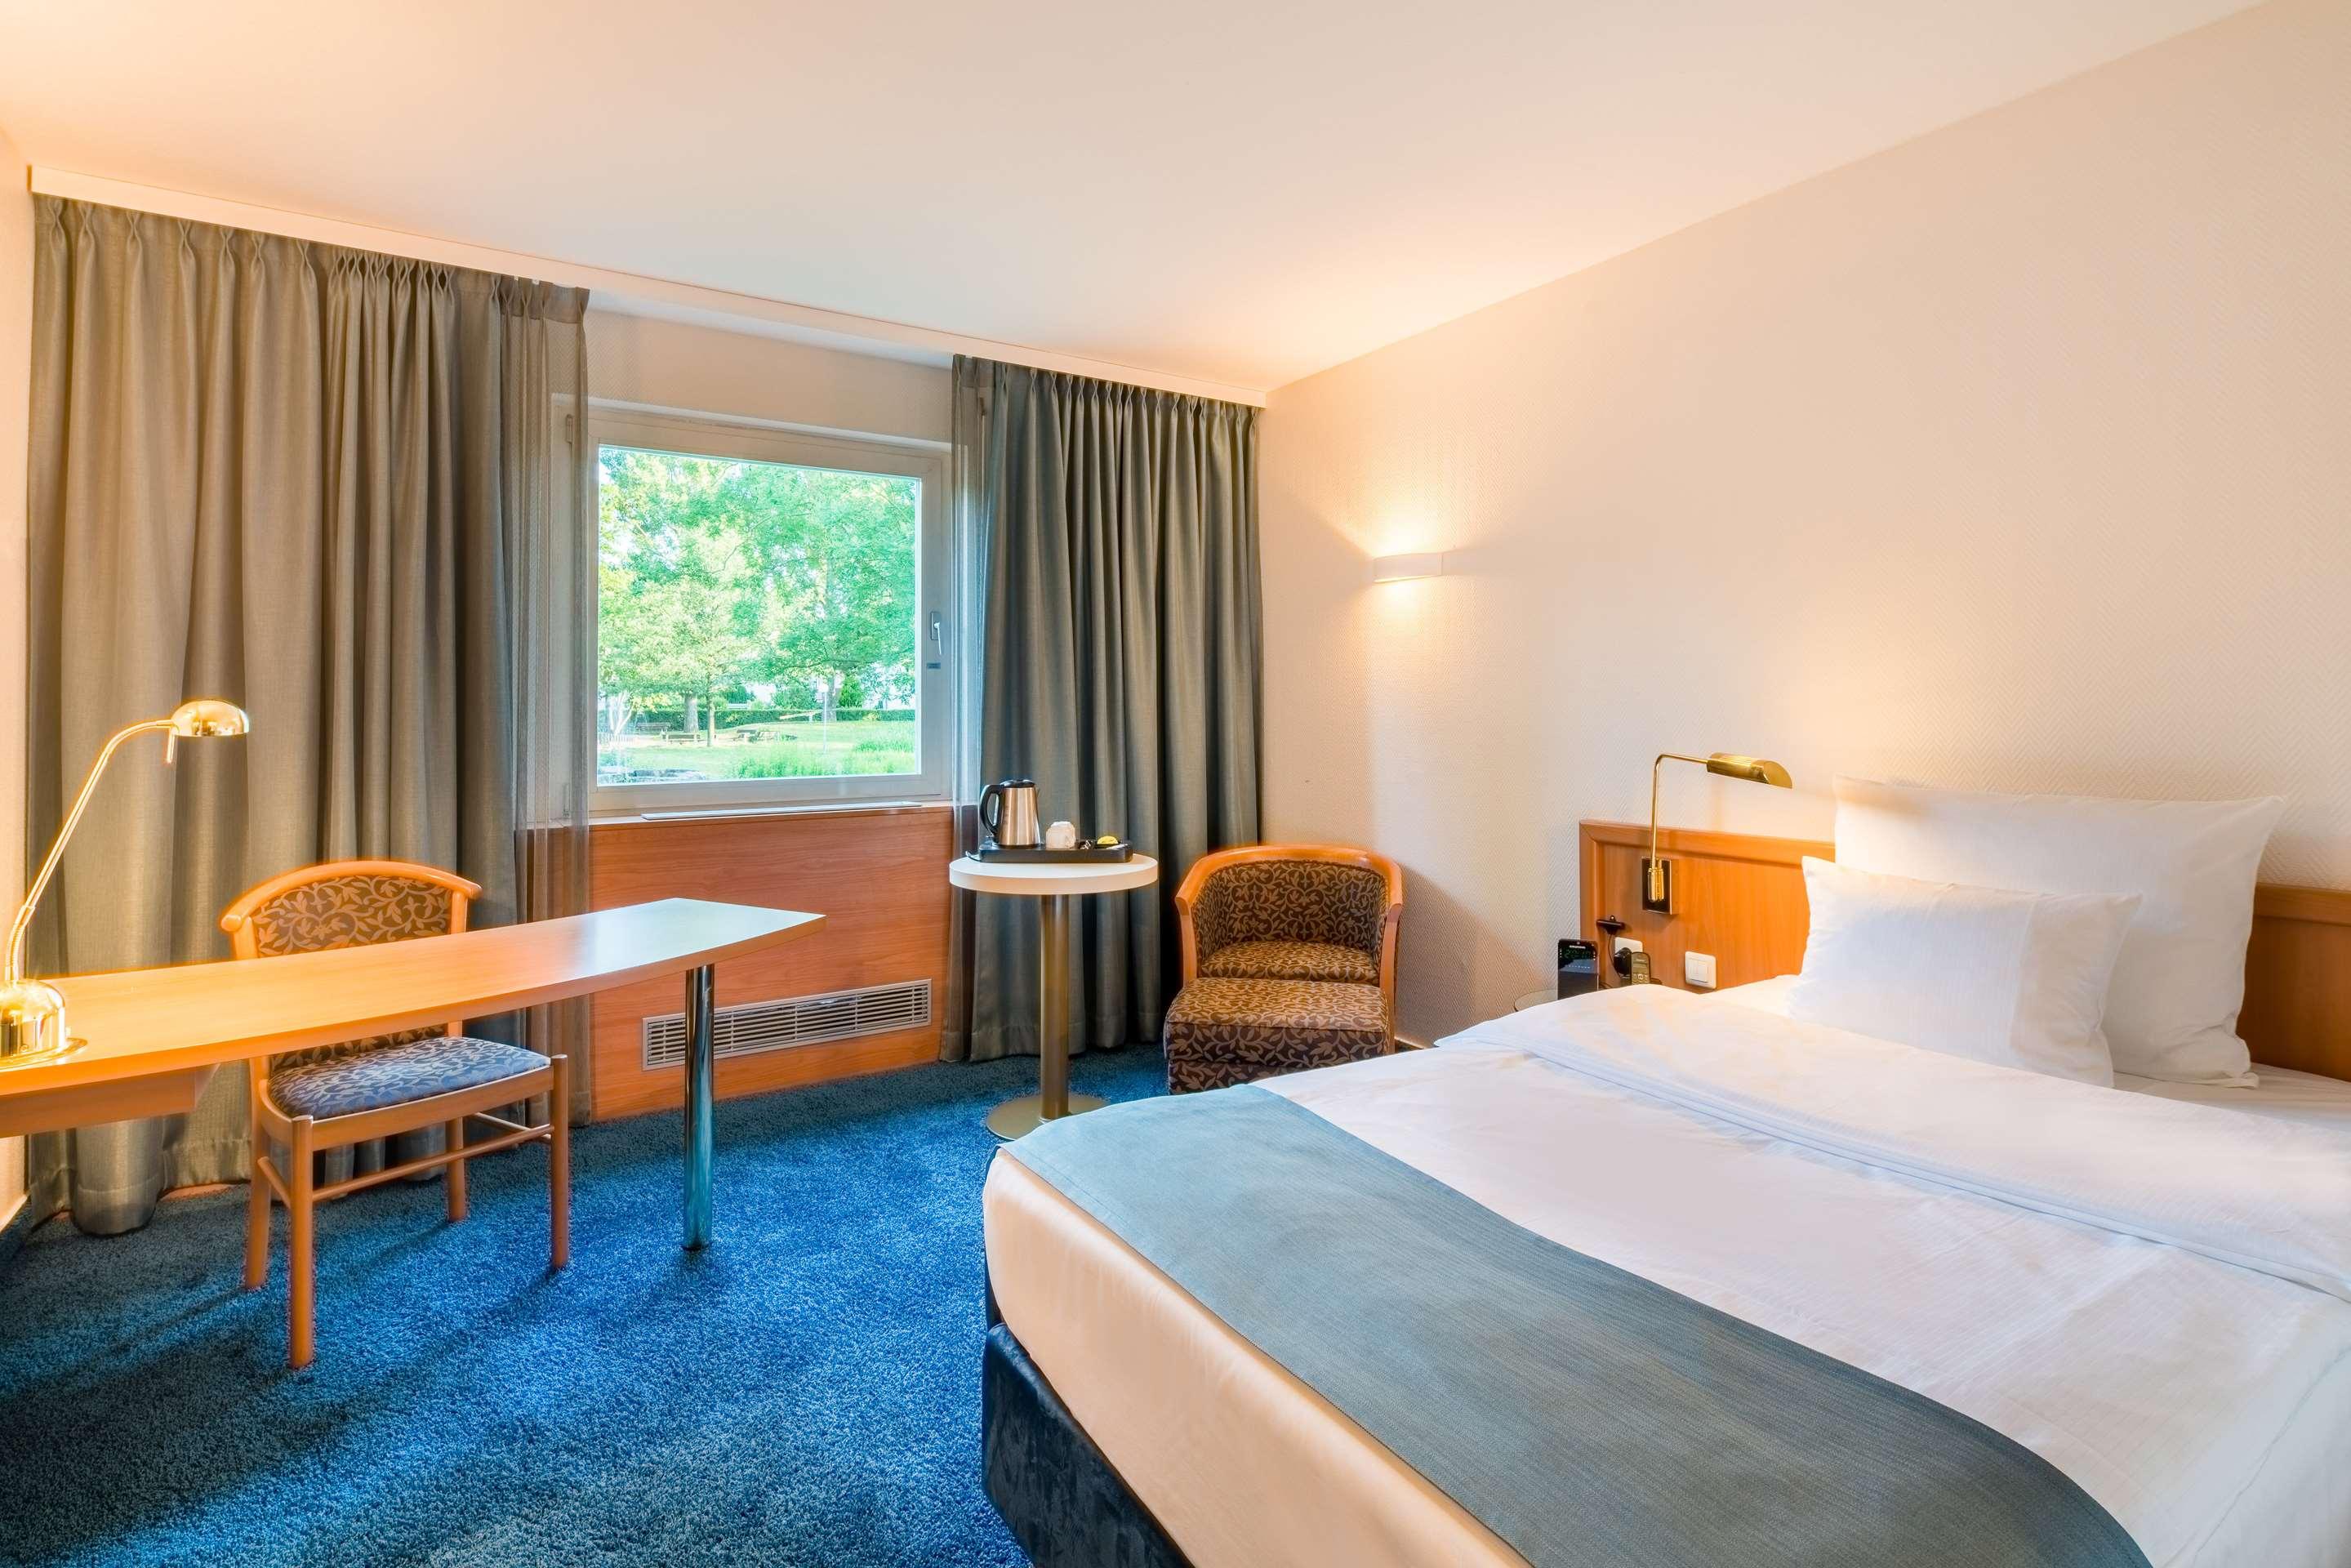 Best Western Plus Hotel Fellbach Stuttgart Fellbach Germany Compare Deals